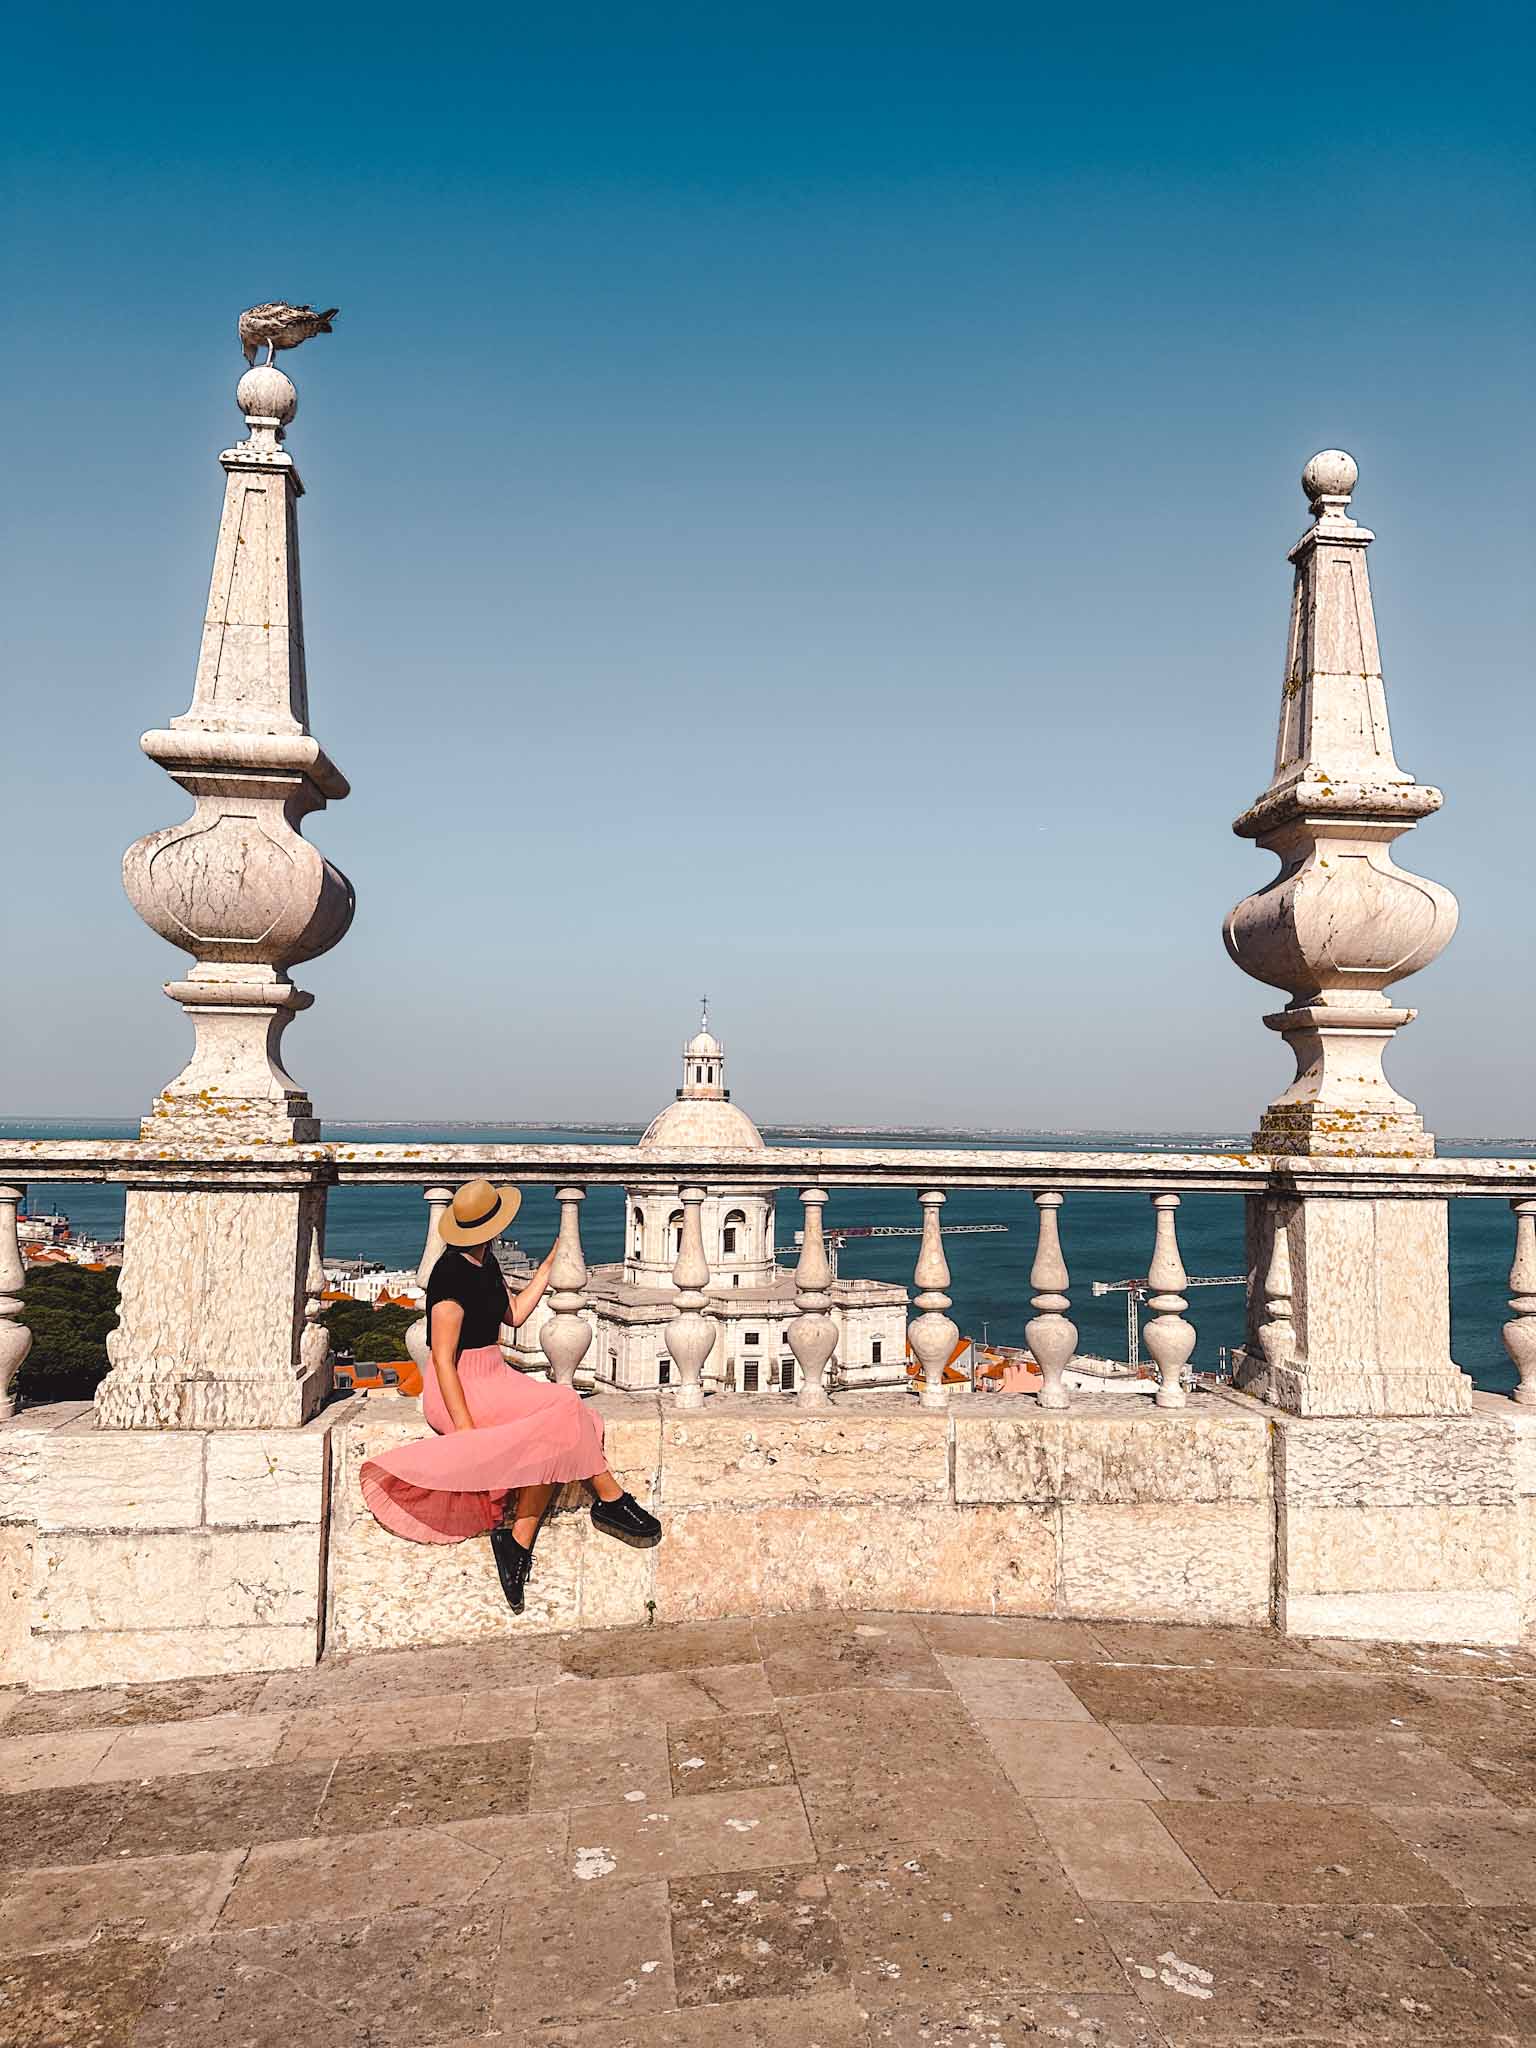 Best Instagram spots in Lisbon - Igreja de São Vicente de Fora